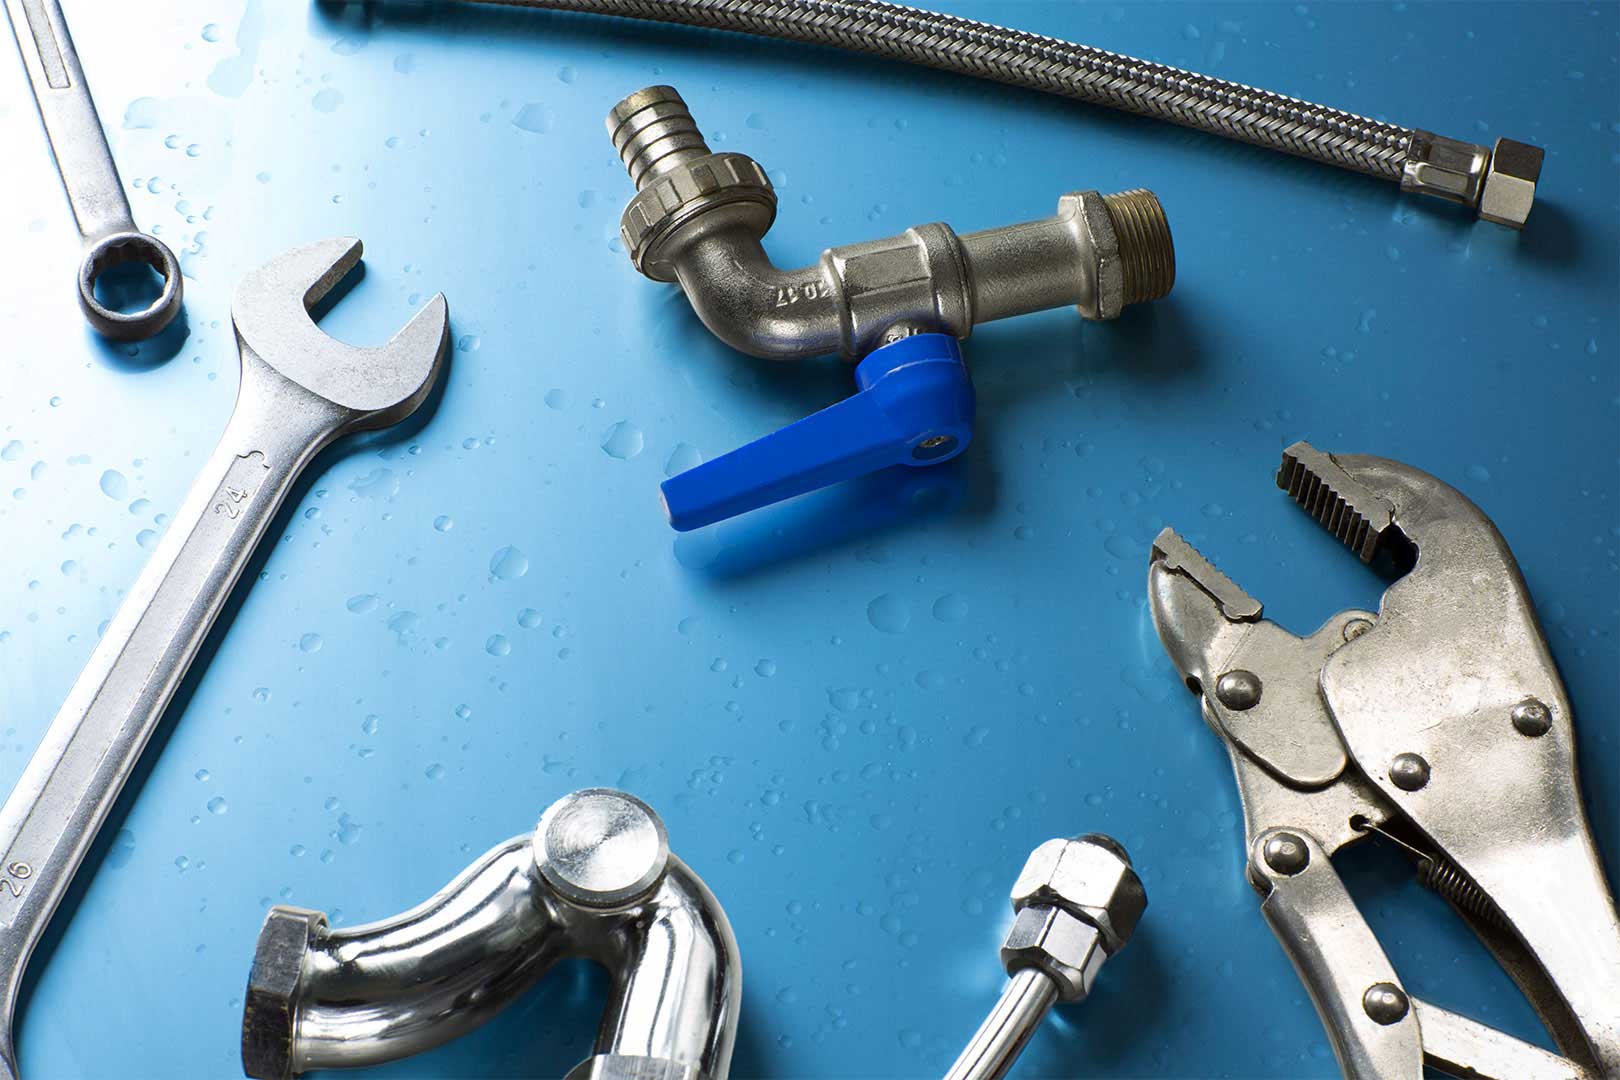 plumbing tools on blue surface ontario ca